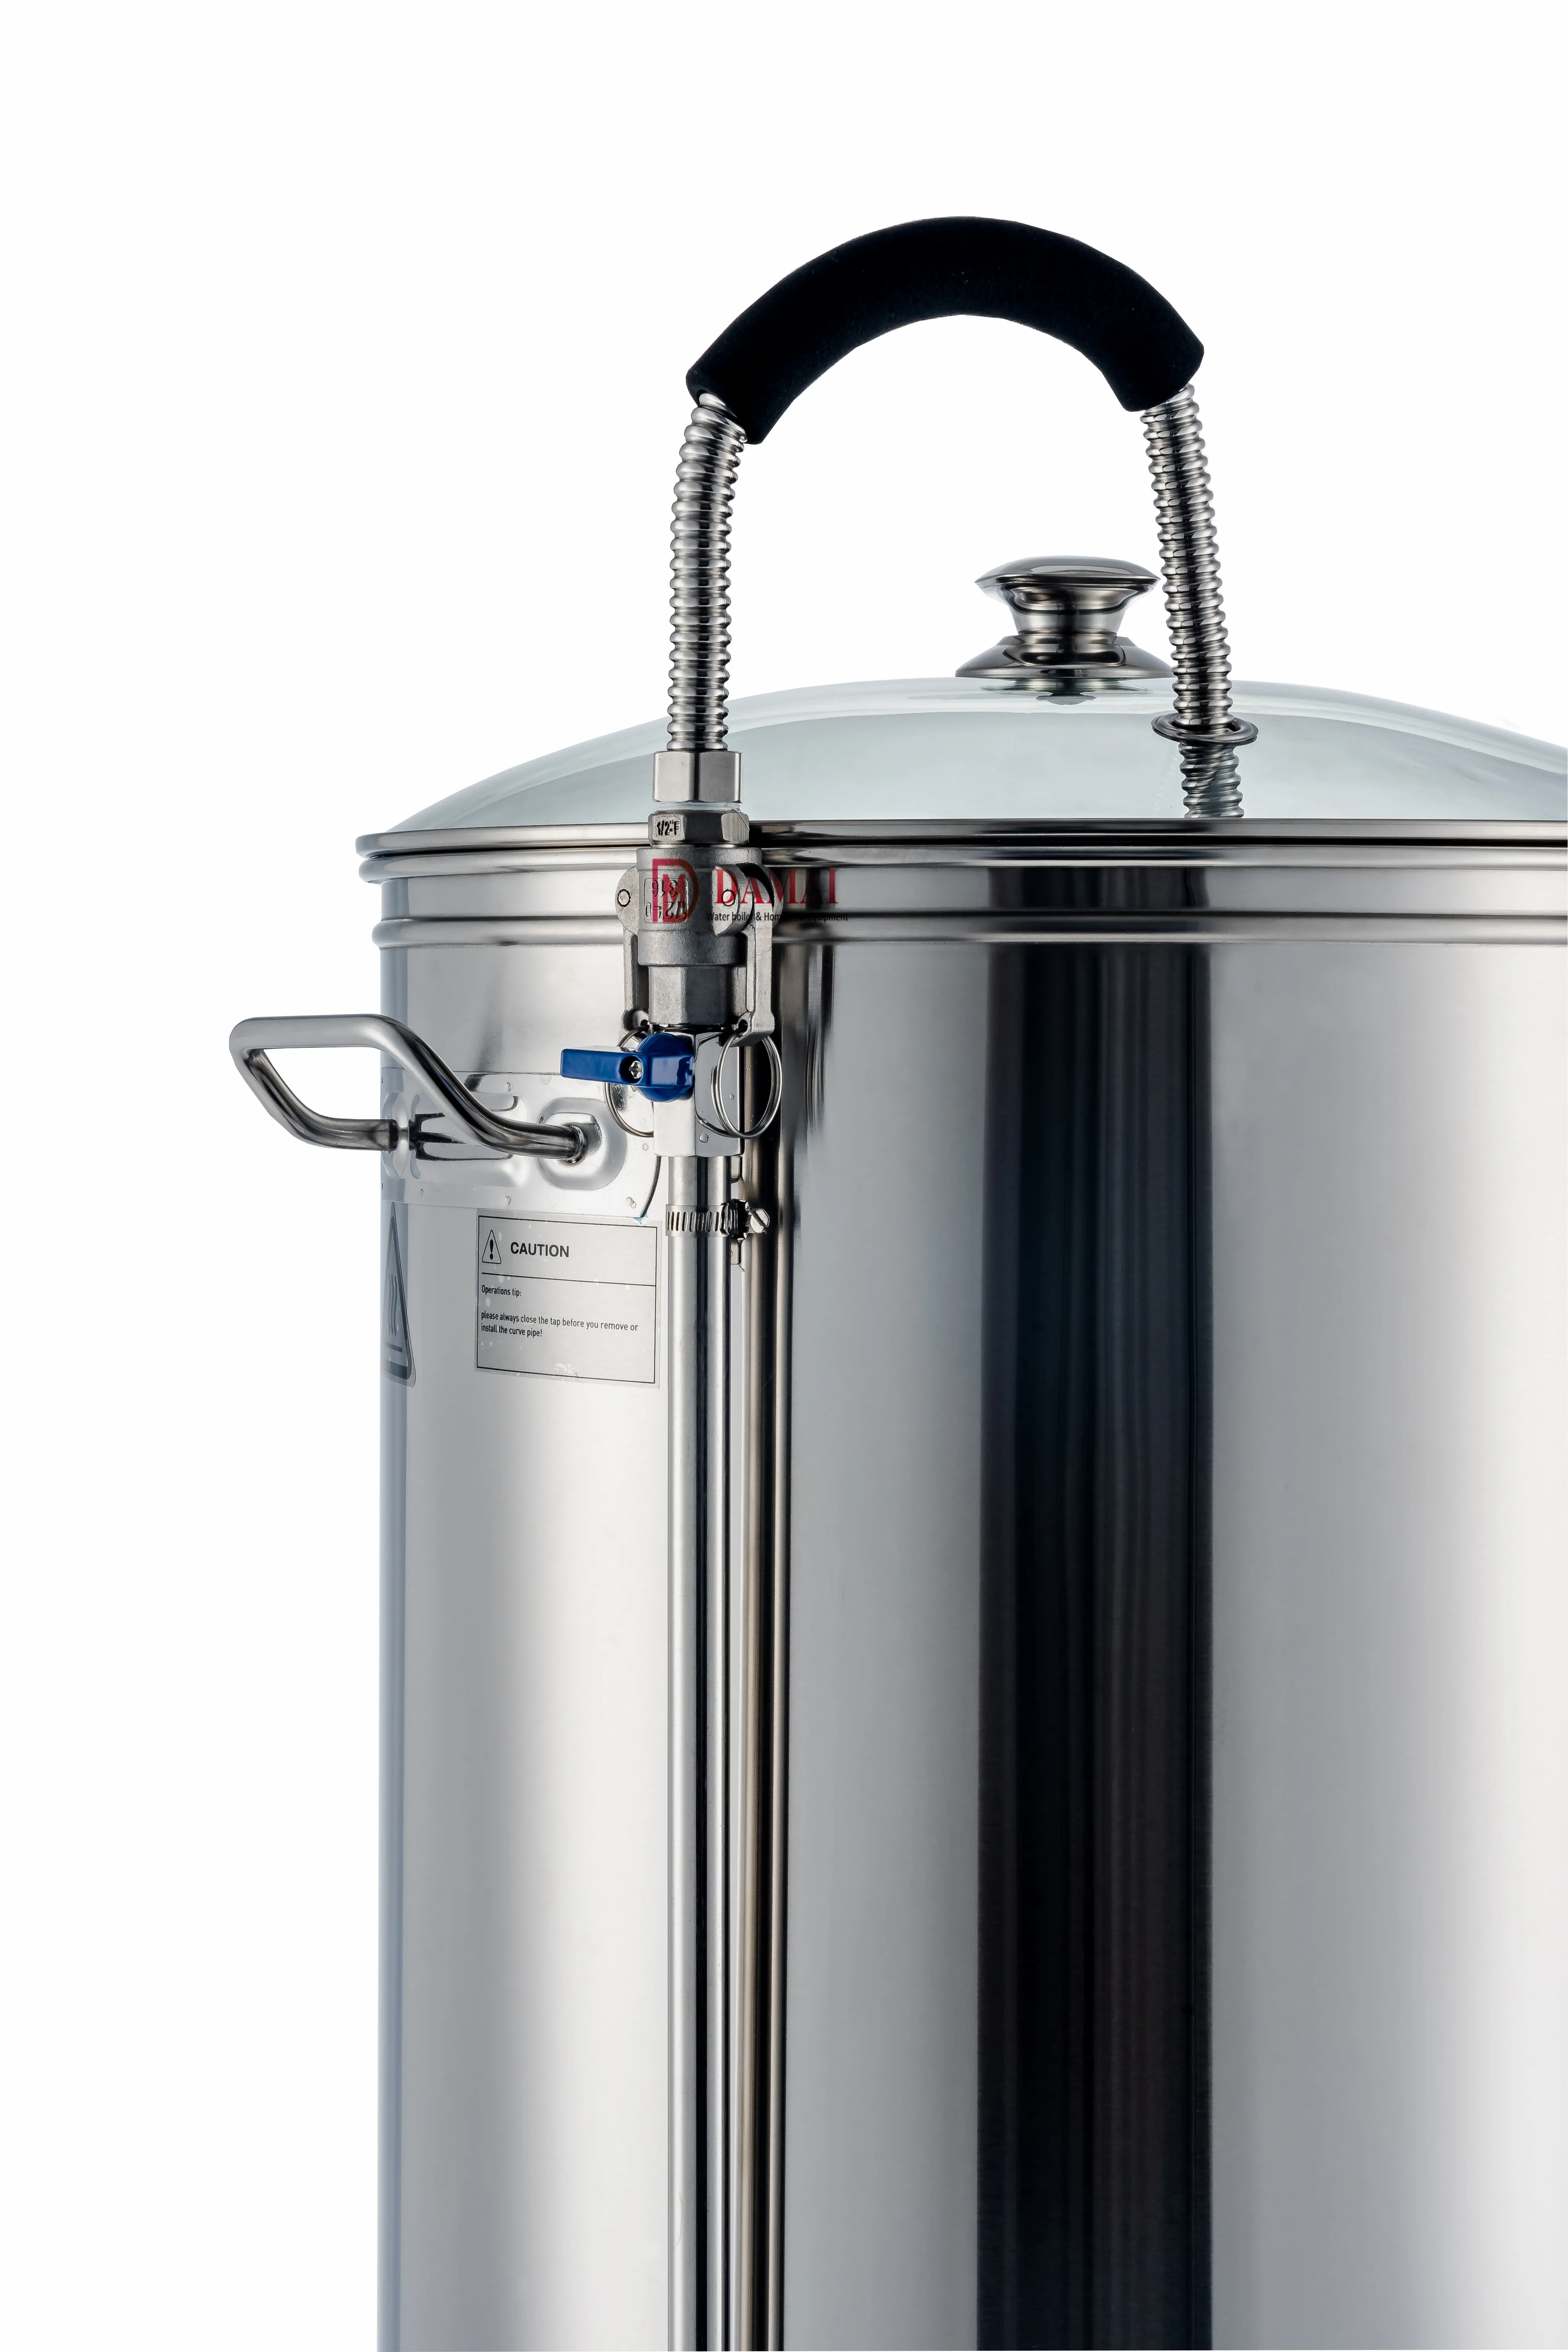 
60L microbrewery homebrew equipment /stainless steel tank /50L similar guten beer mash tun 